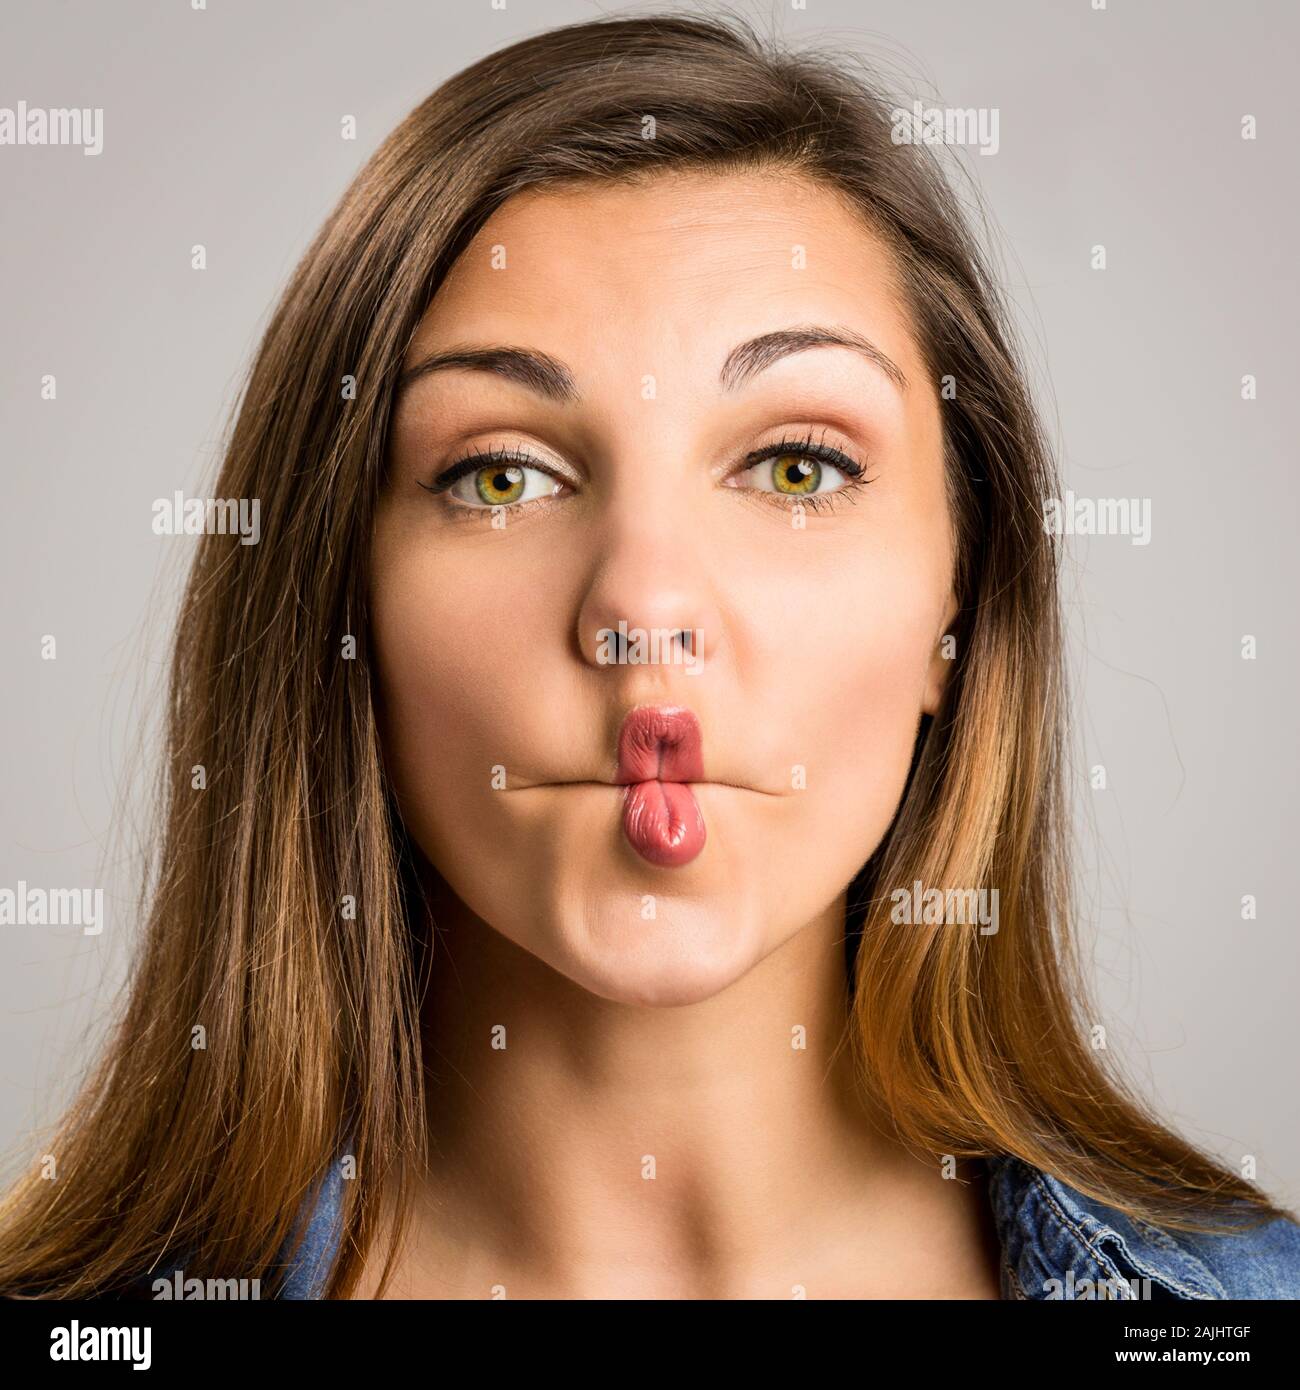 Portrait of a beautiful woman making a pout expression Stock Photo - Alamy